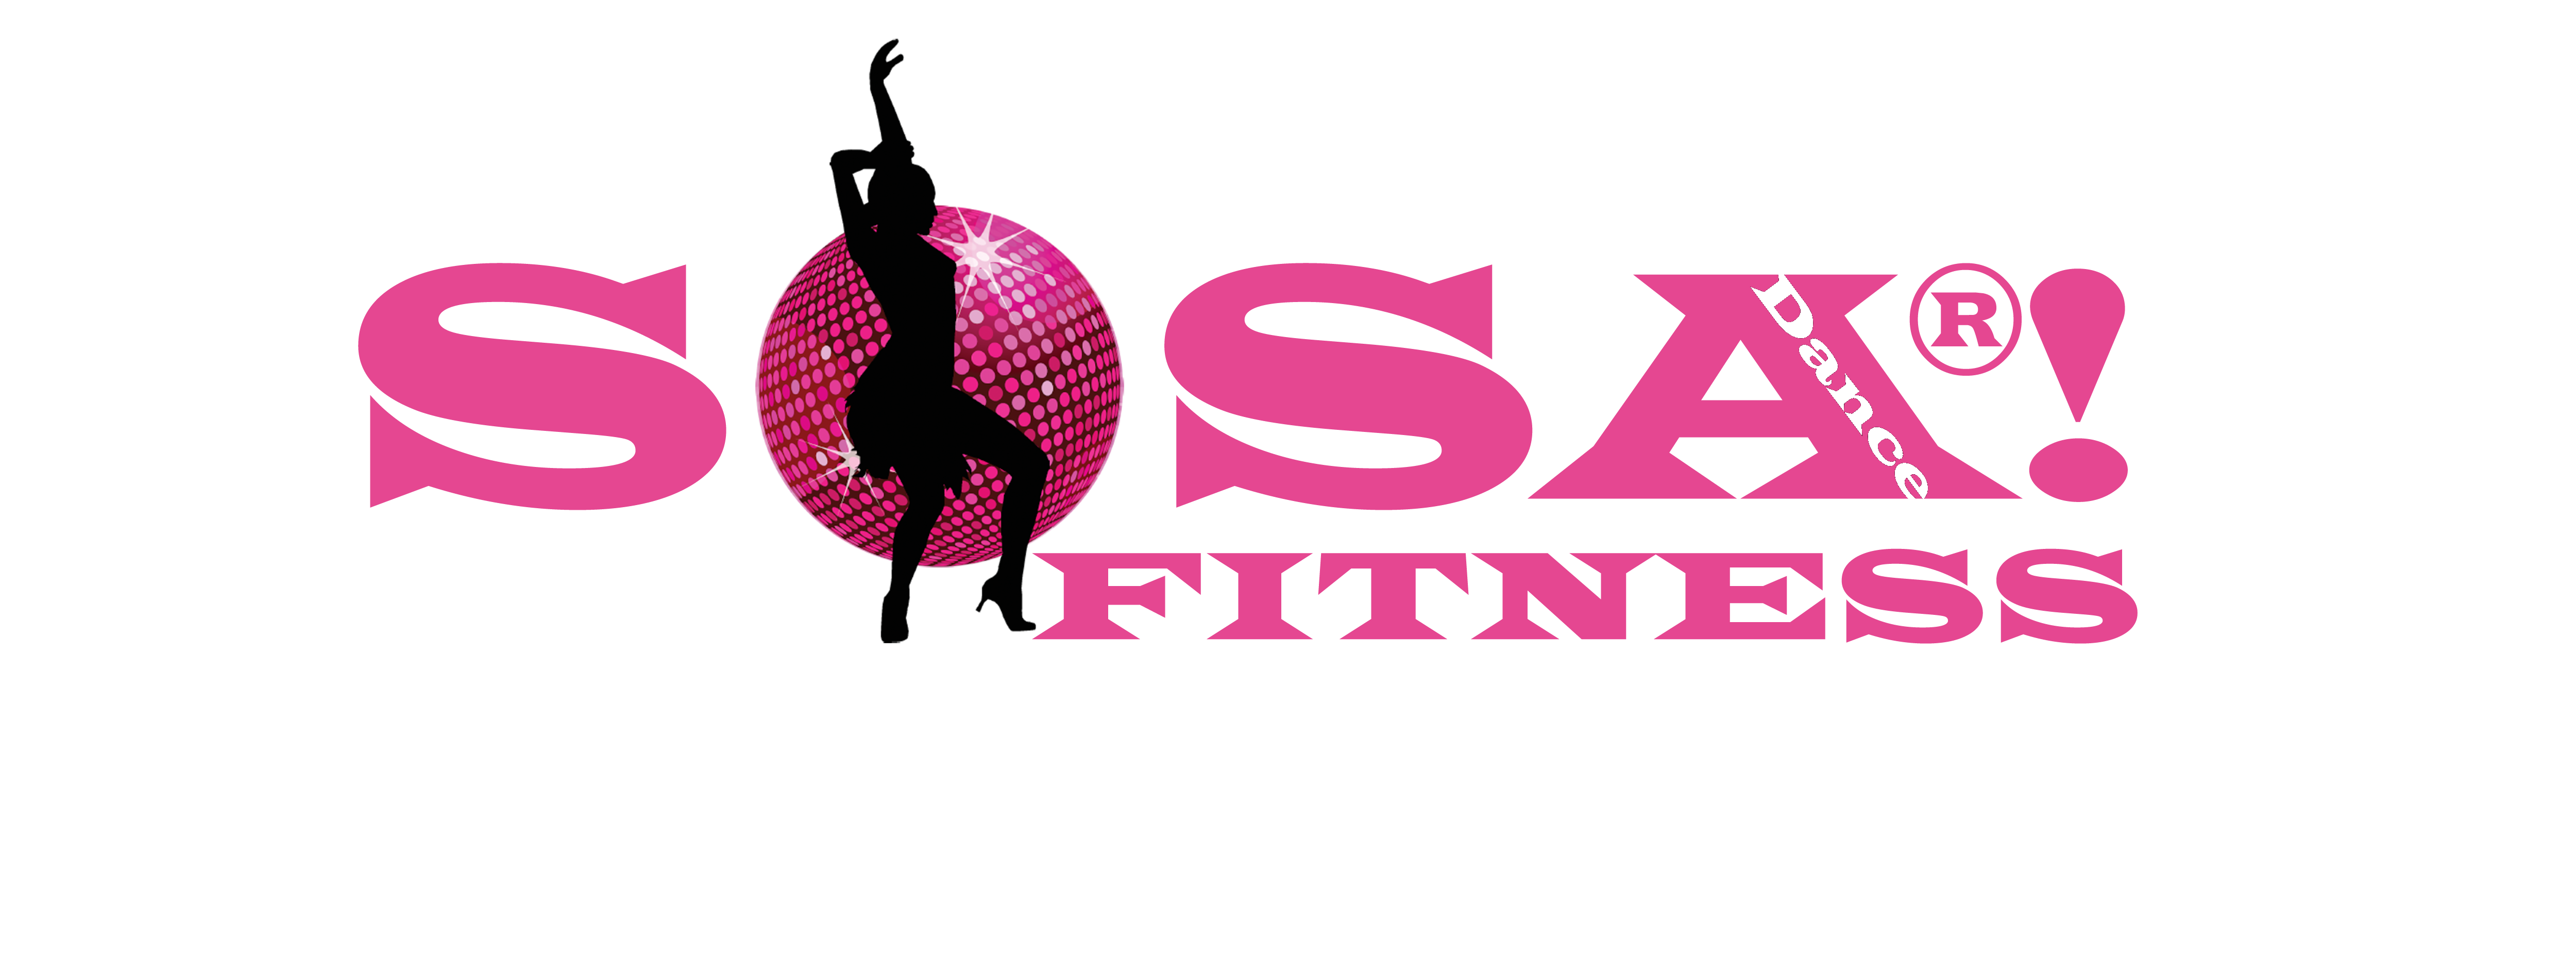 sosa new logo pink writing no background